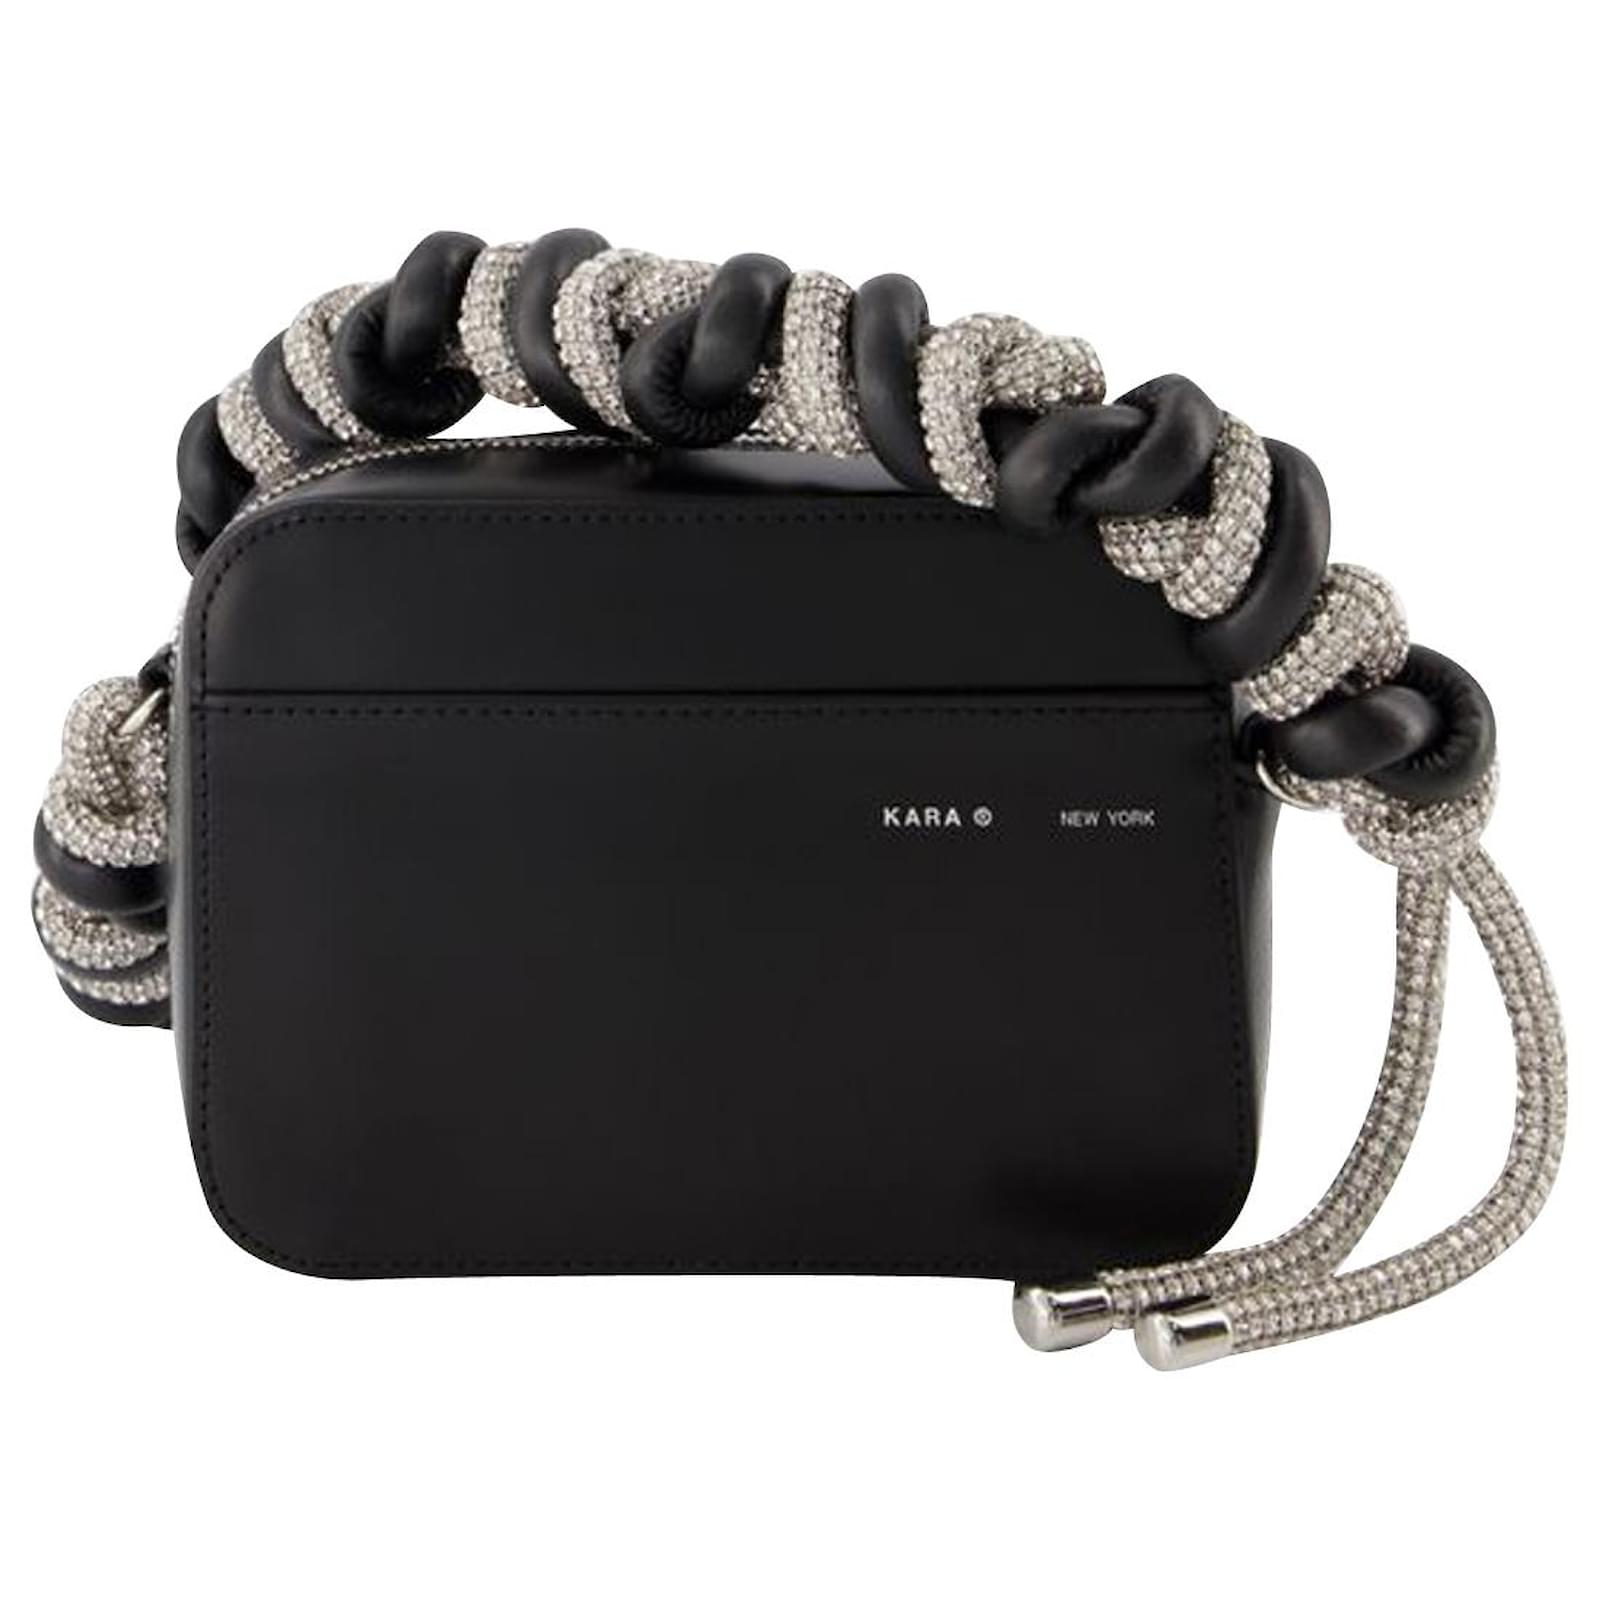 Kara Black Camera Chain Bag